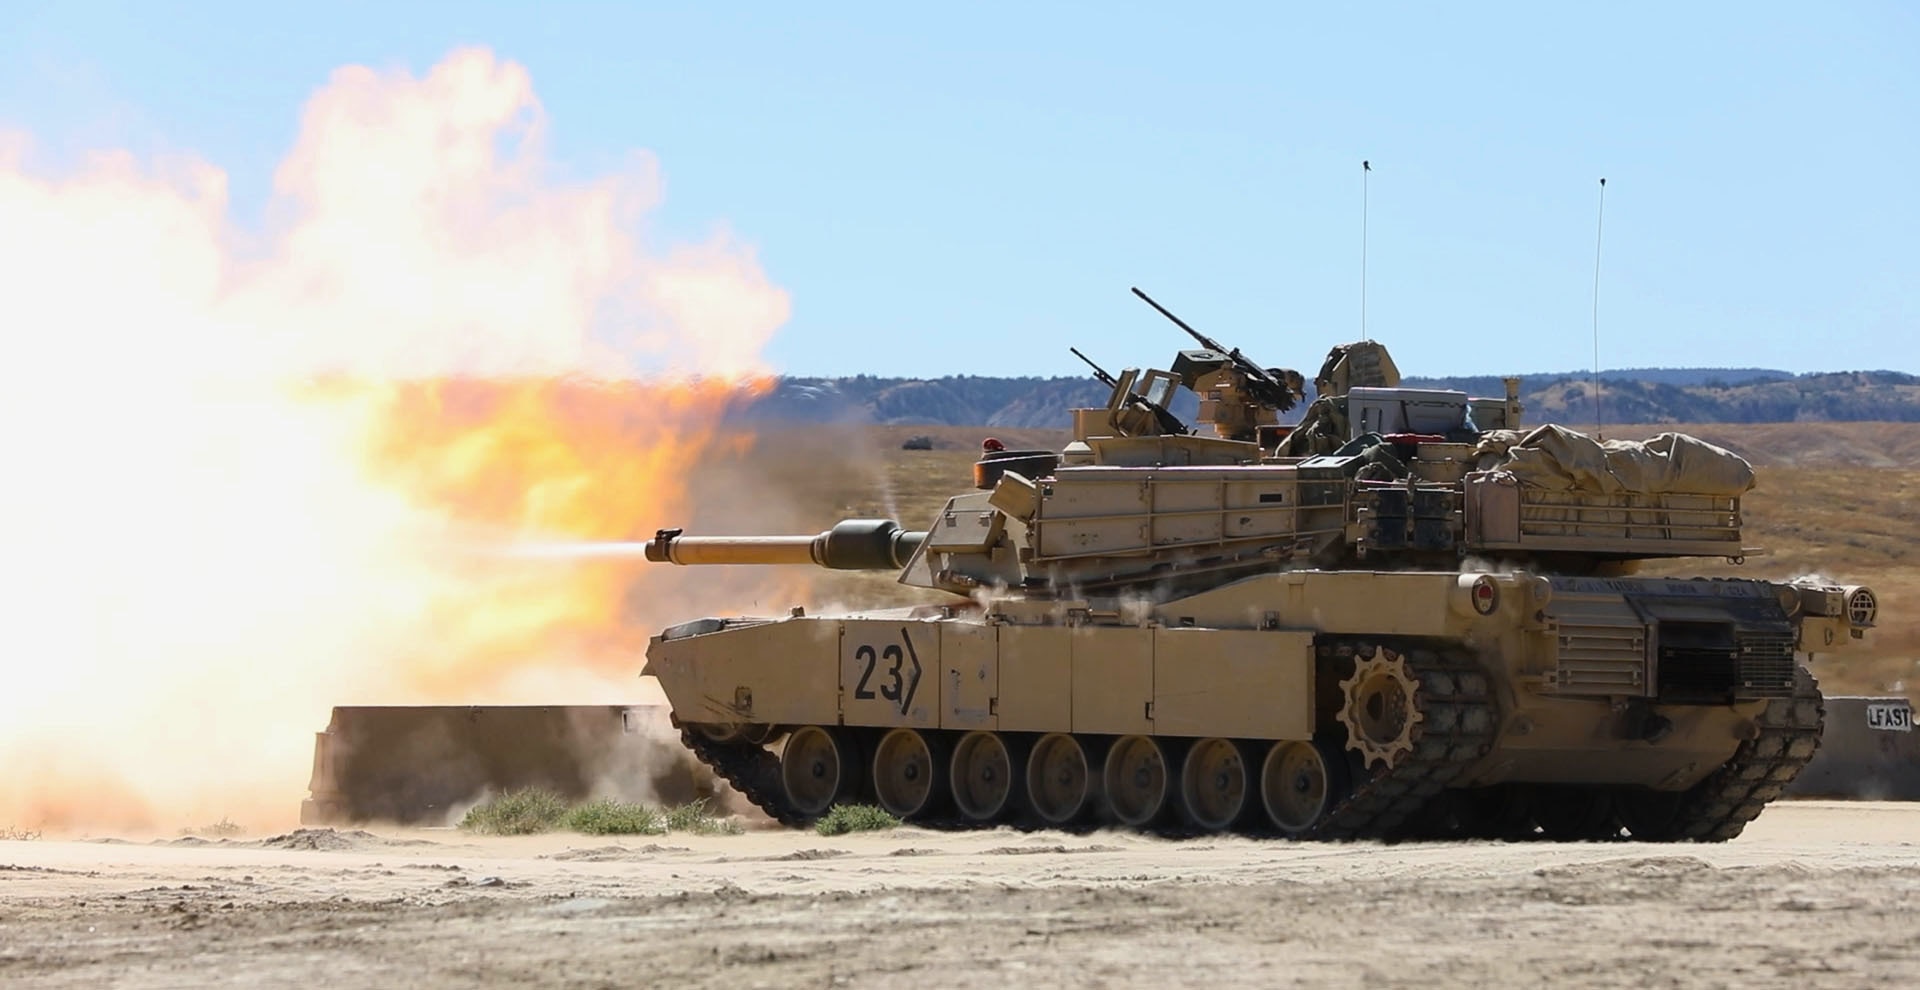 A tank fires a round.